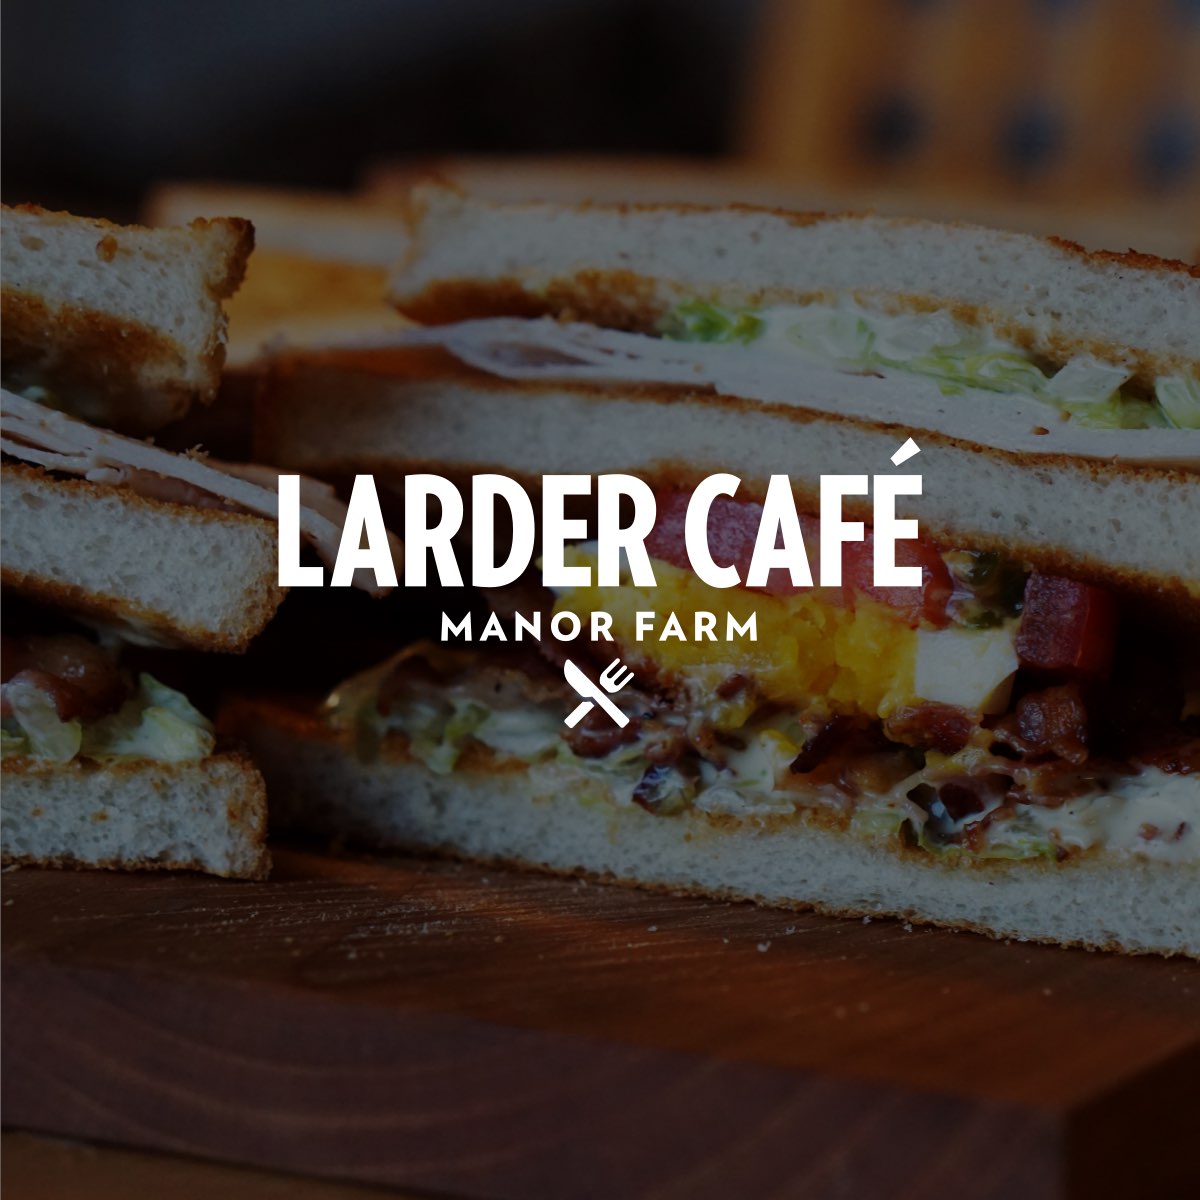 The Larder Café